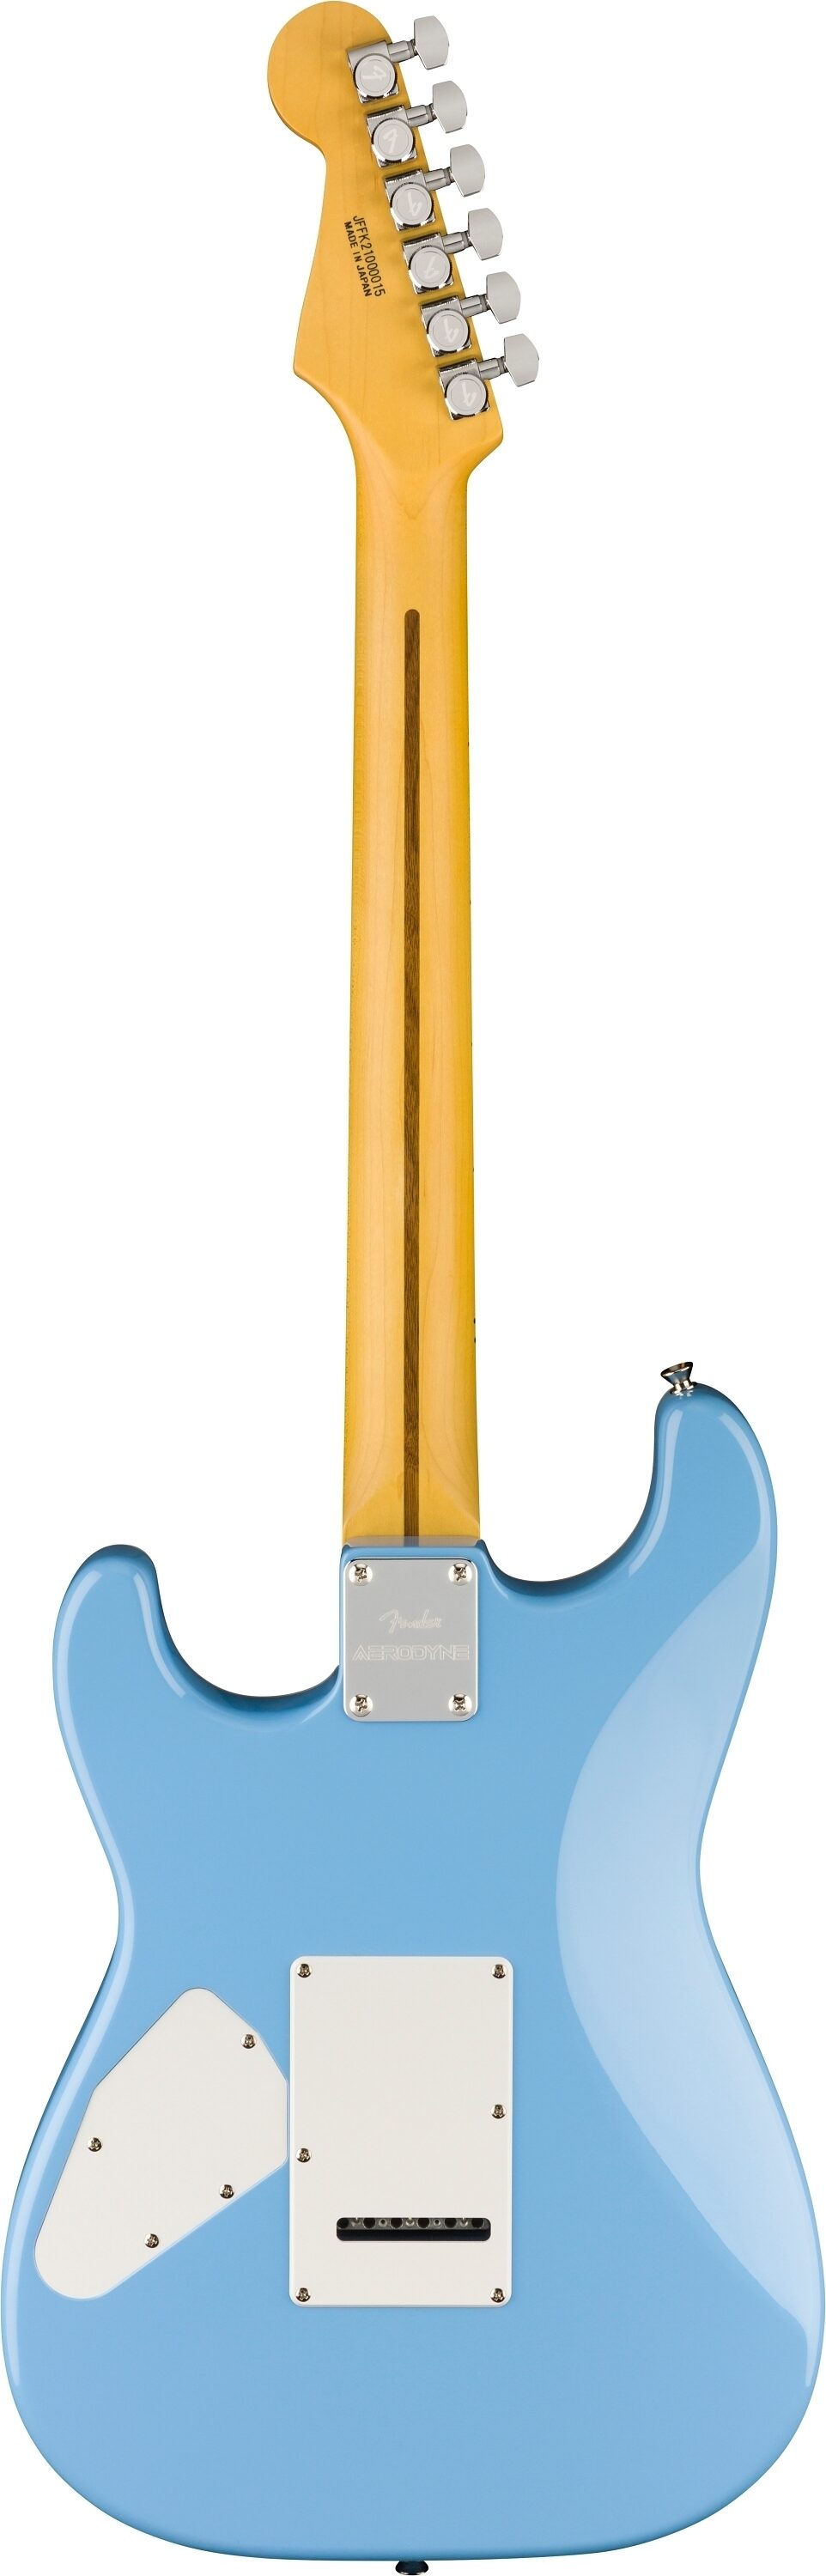 Fender Aerodyne Special Stratocaster Electric Guitar, Maple